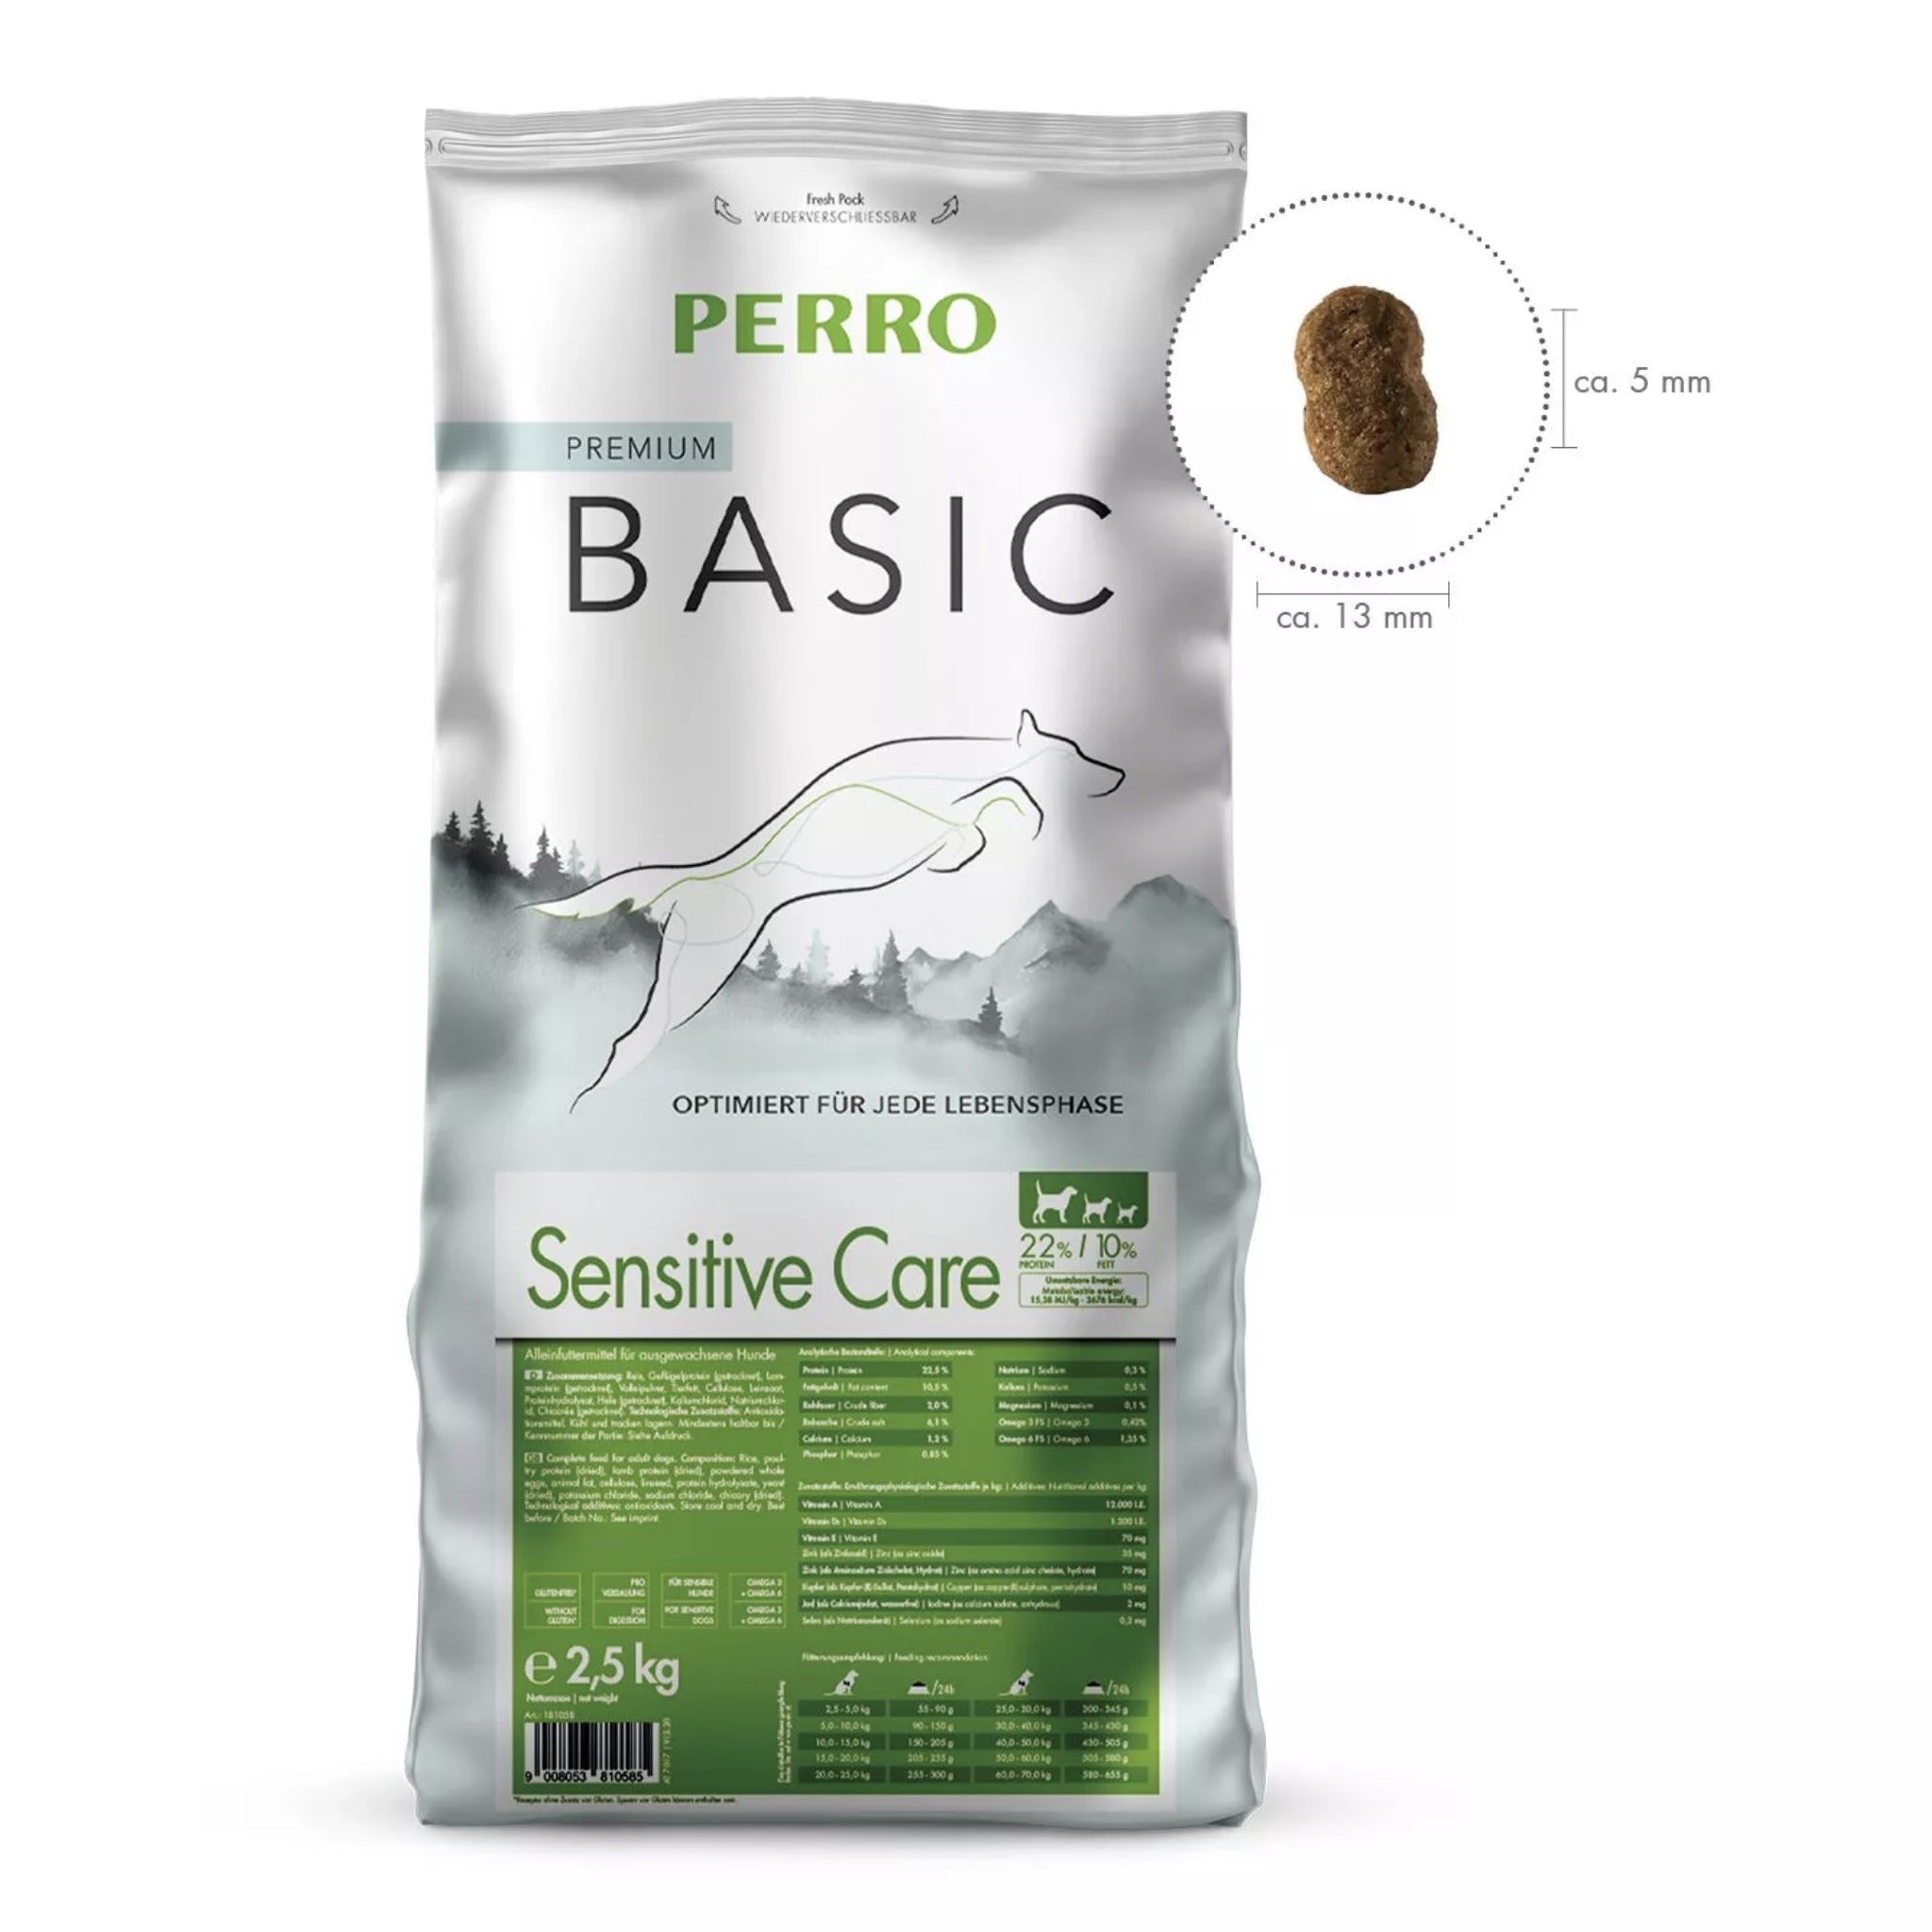 Perro Basic Sensitive Care - Hunde Trockenfutter - Woofshack